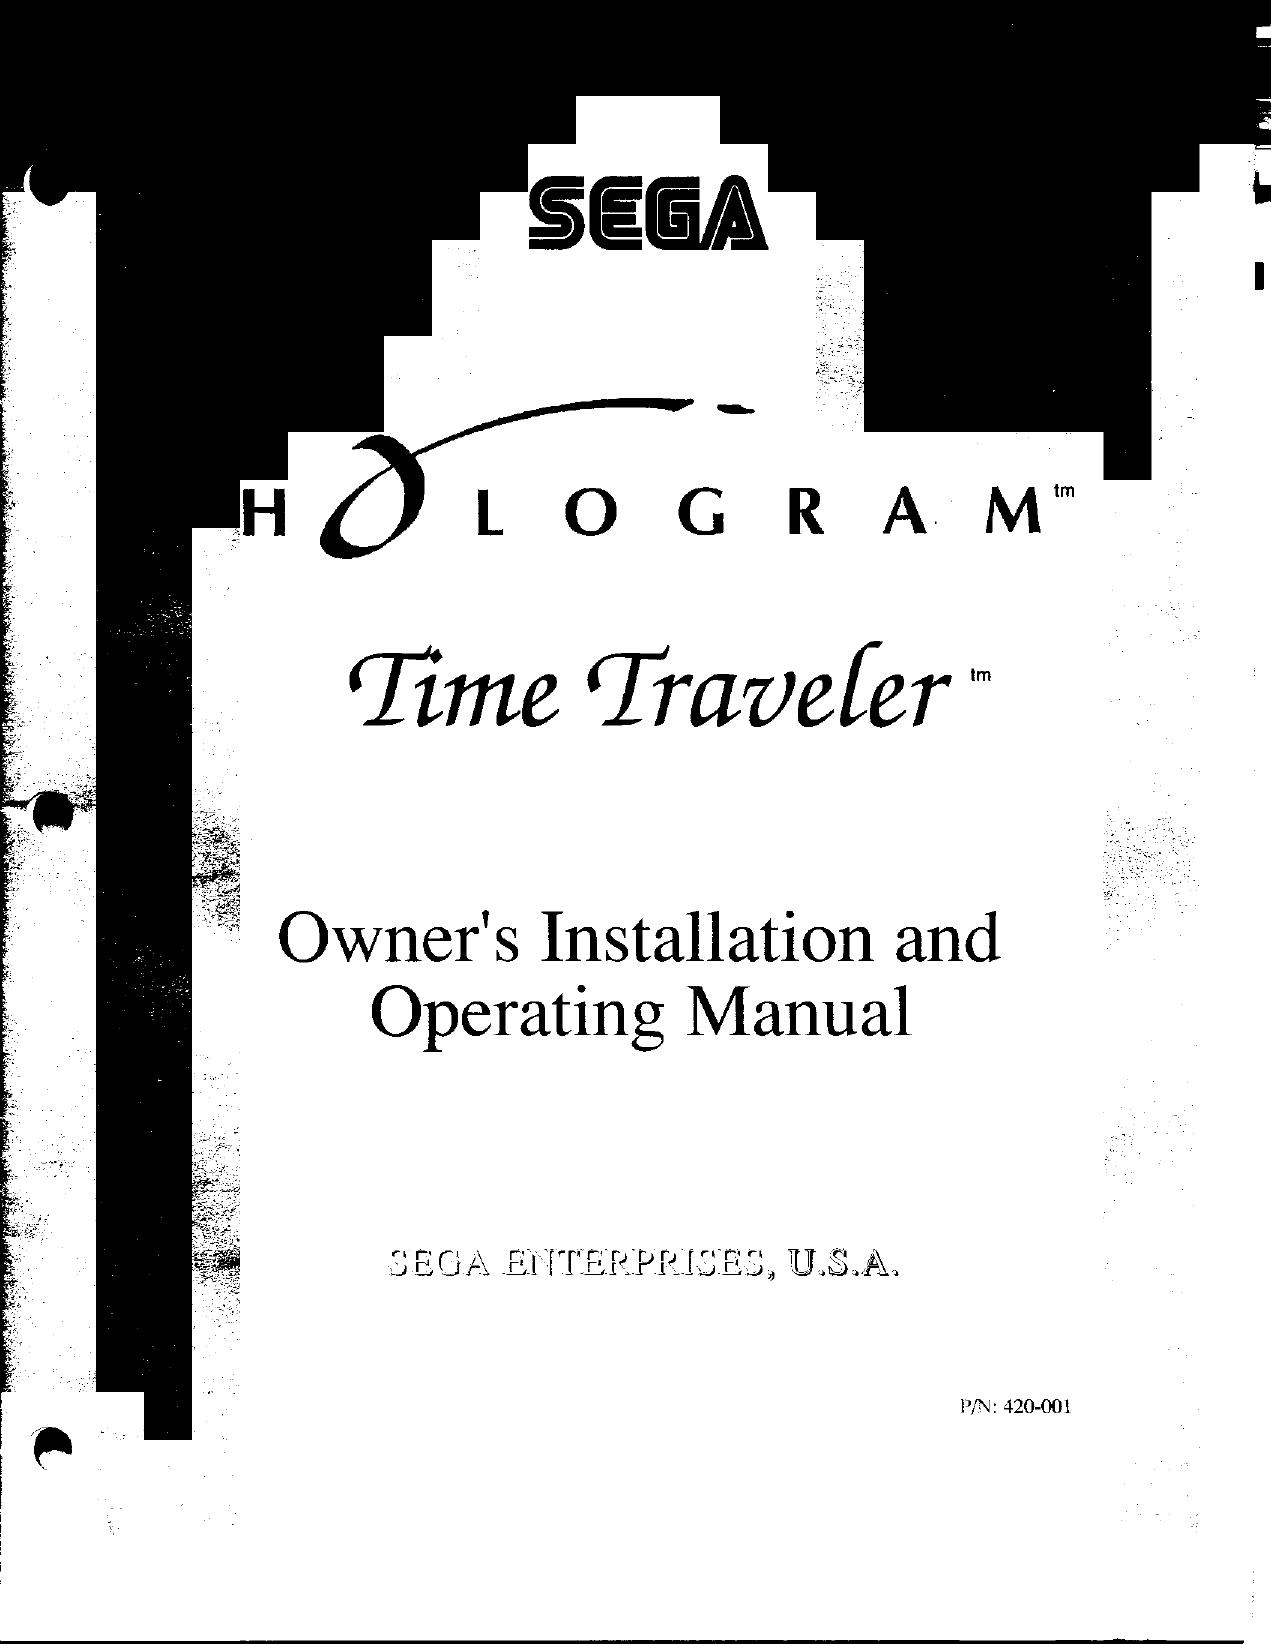 TimeTraveler Manual